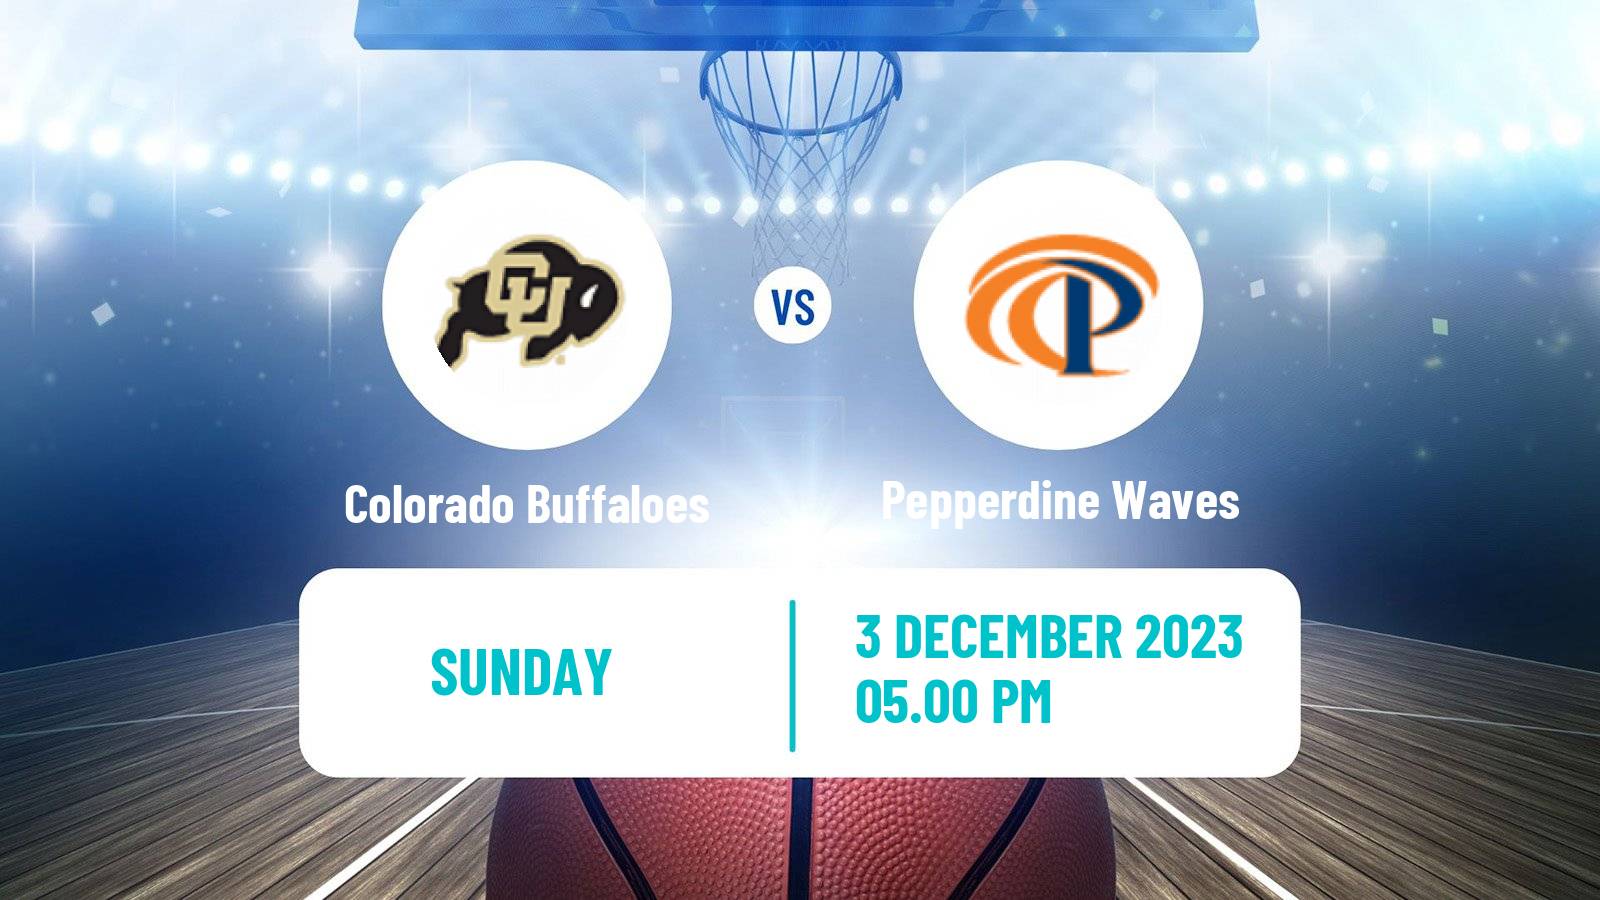 Basketball NCAA College Basketball Colorado Buffaloes - Pepperdine Waves